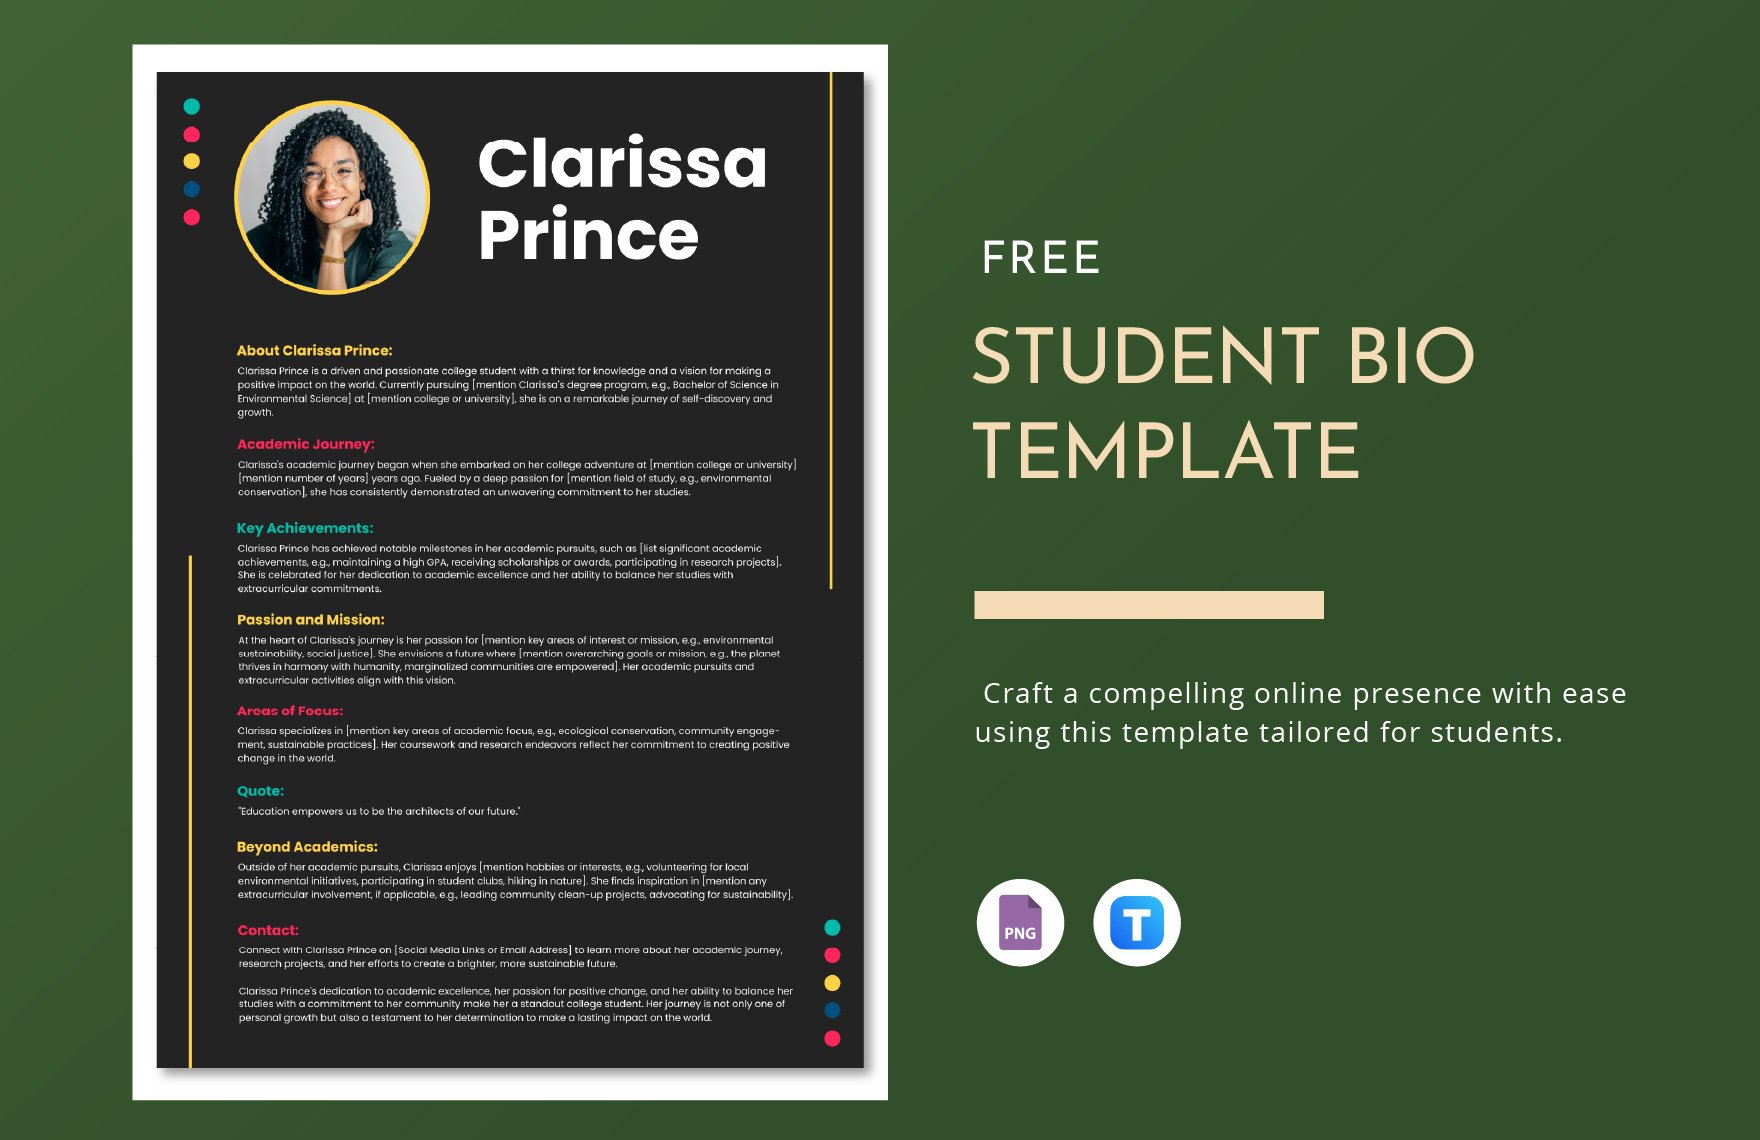 Free Student Bio Template